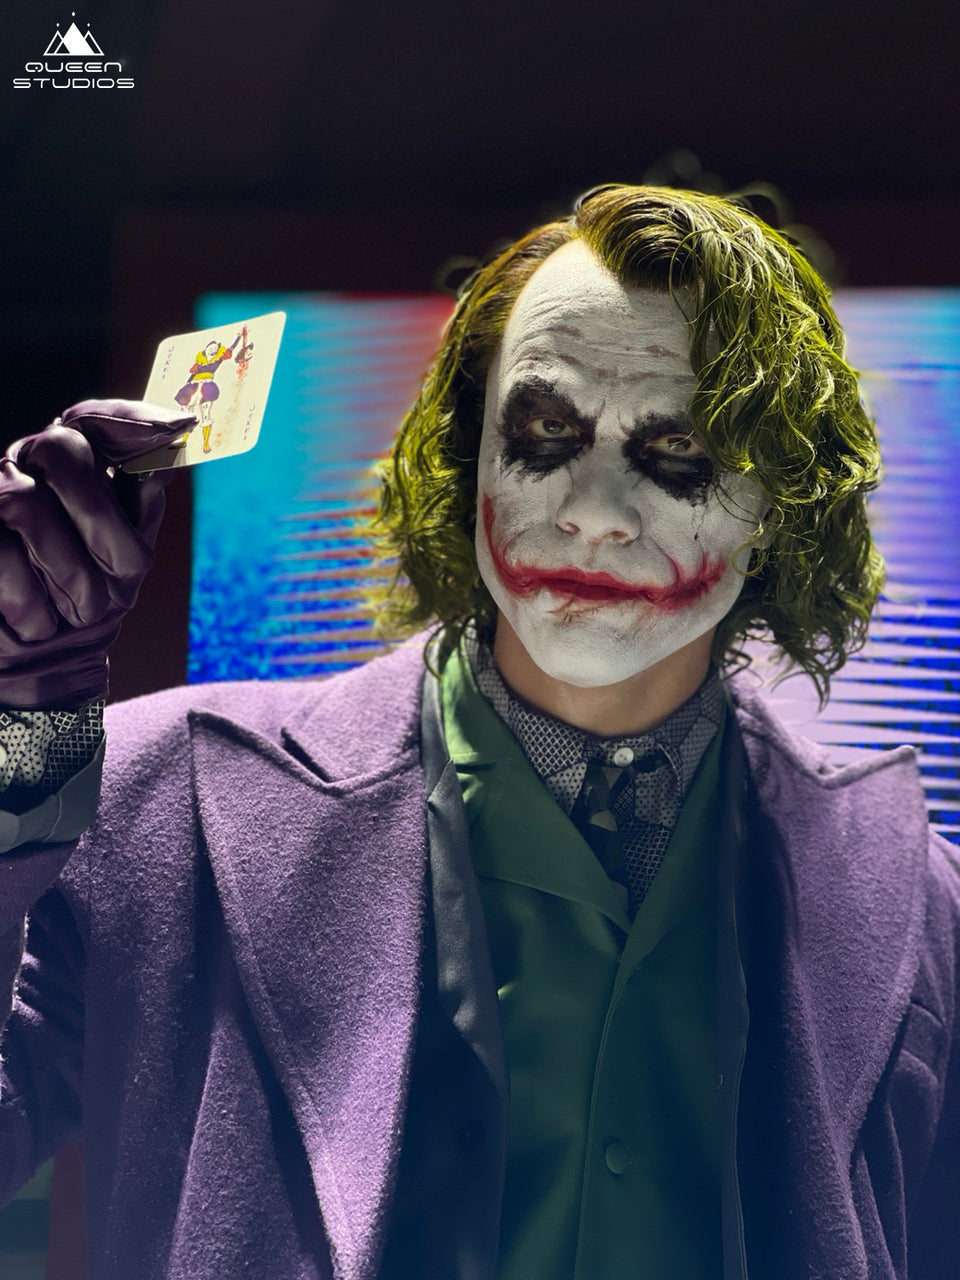 Queen Studios Heath Ledger Joker Lifesize Statue – Cosmic Chase ...